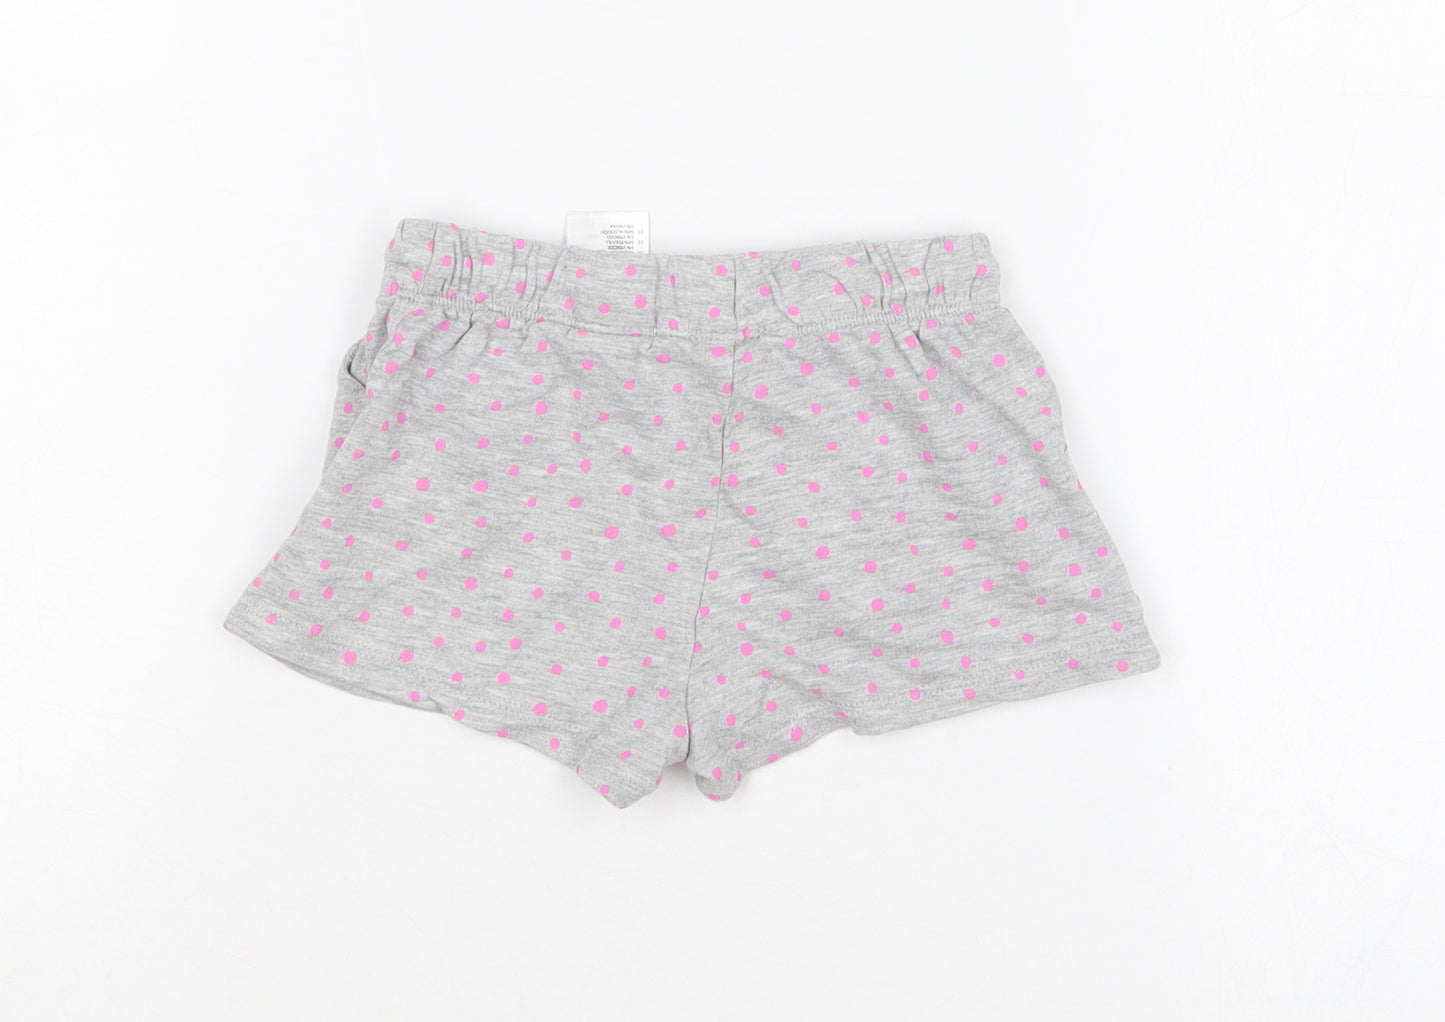 H&M Girls Grey Polka Dot Cotton Sweat Shorts Size 2-3 Years  Regular